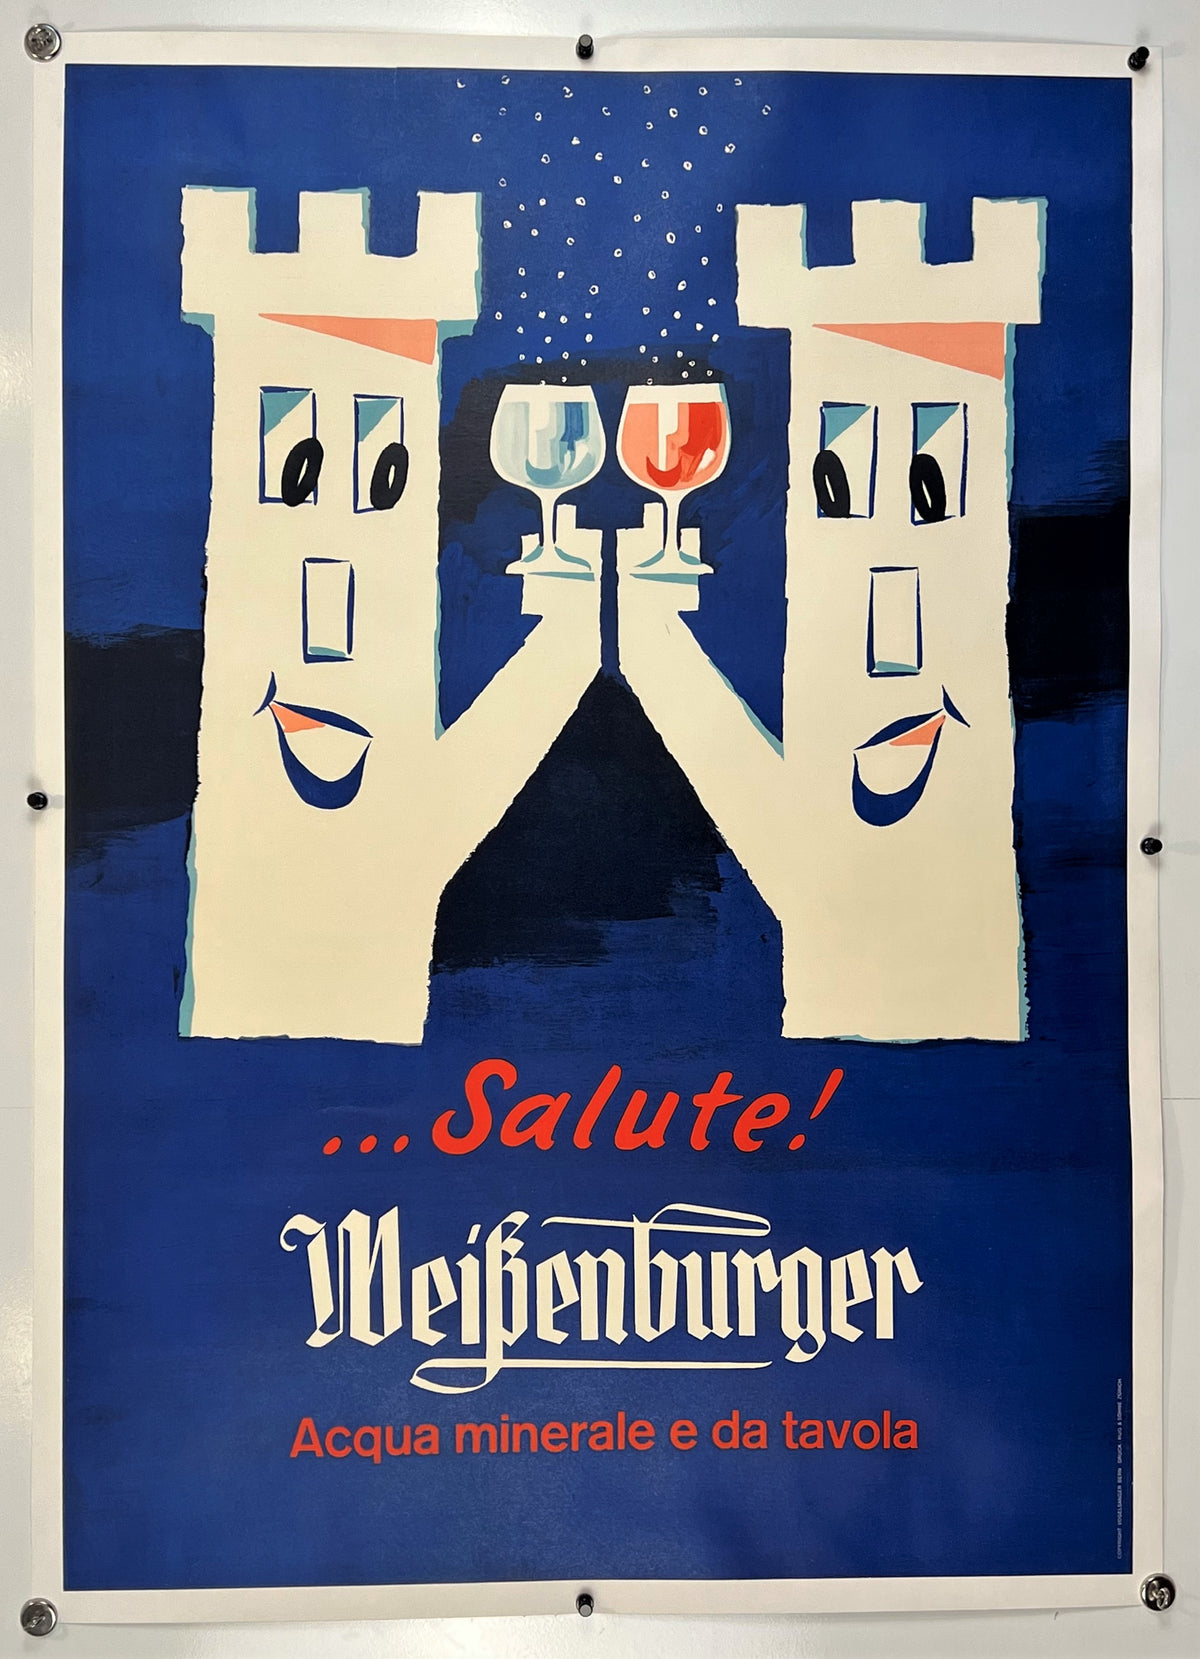 Weissenburger Water - Authentic Vintage Poster